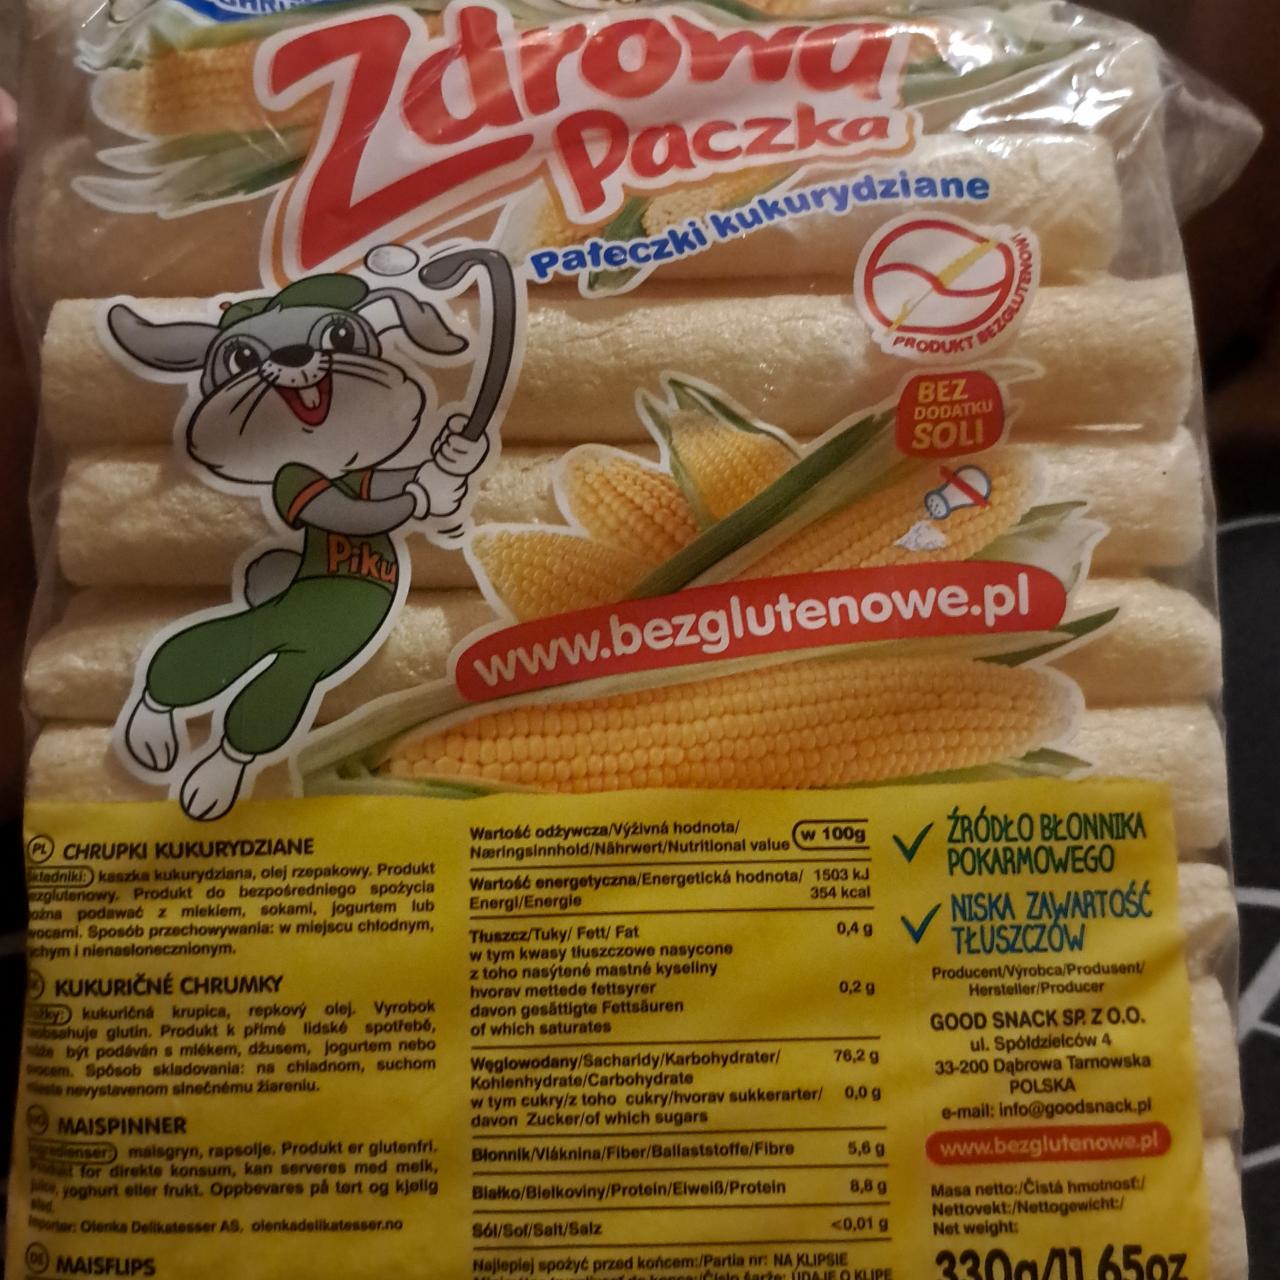 Фото - Полочки кукурузные Zdrowa Paczka Good Snack